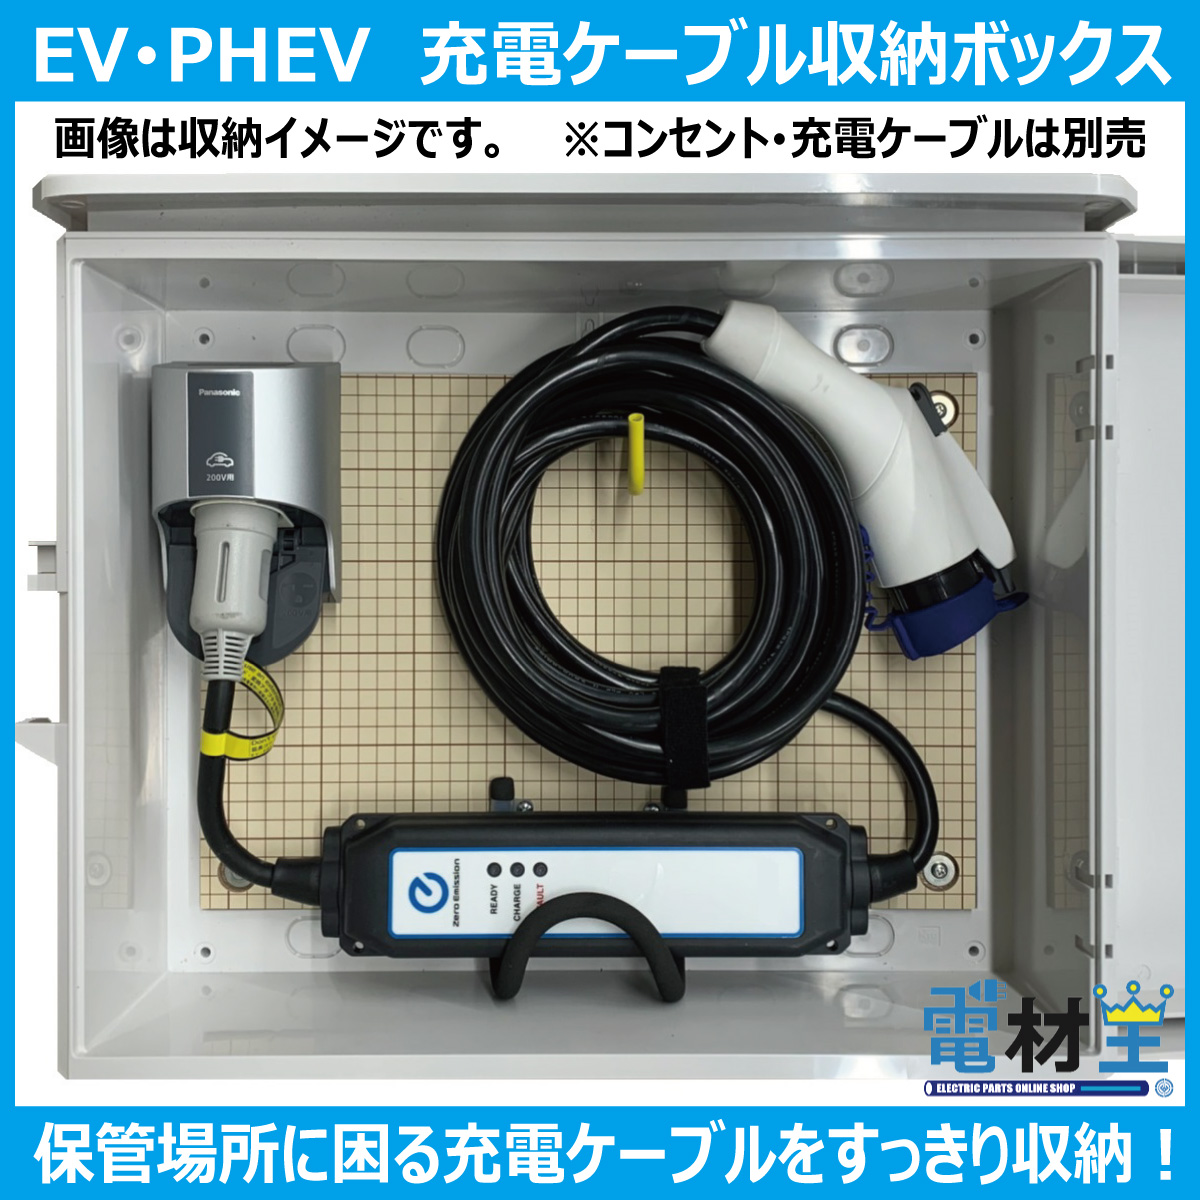 EV・PHEV用 充電ケーブル収納ボックス スイッチ付 D-EVBOX54A-S - 4